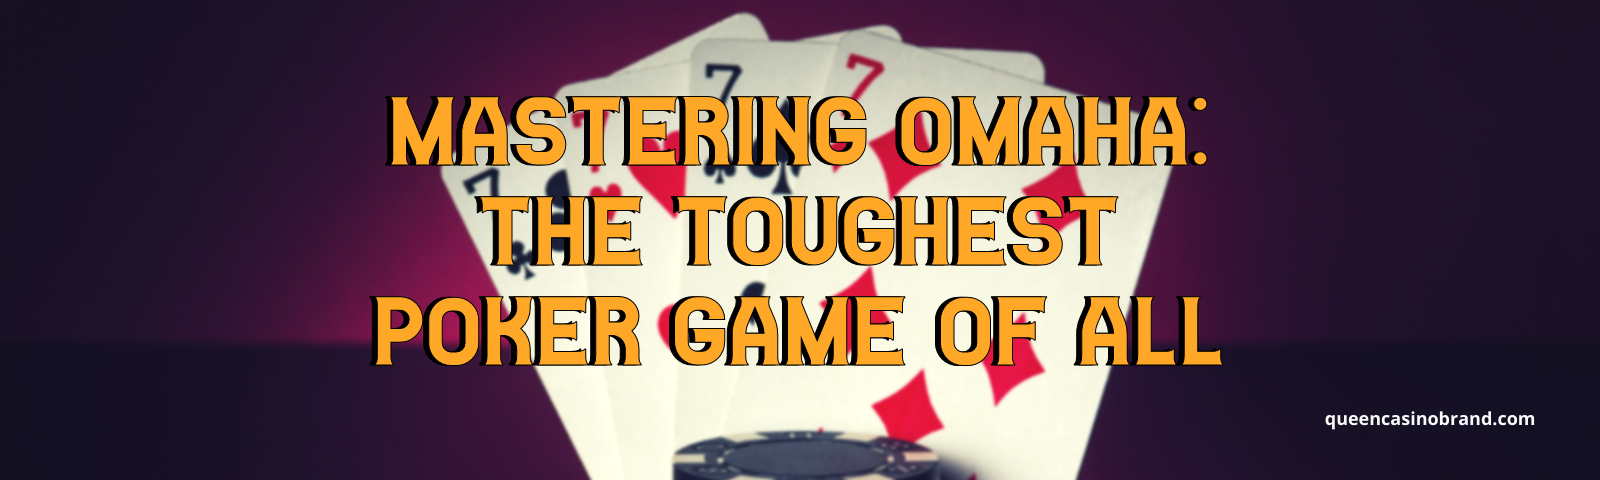 Omaha Toughest Poker Game of All - Queen Casino Brand